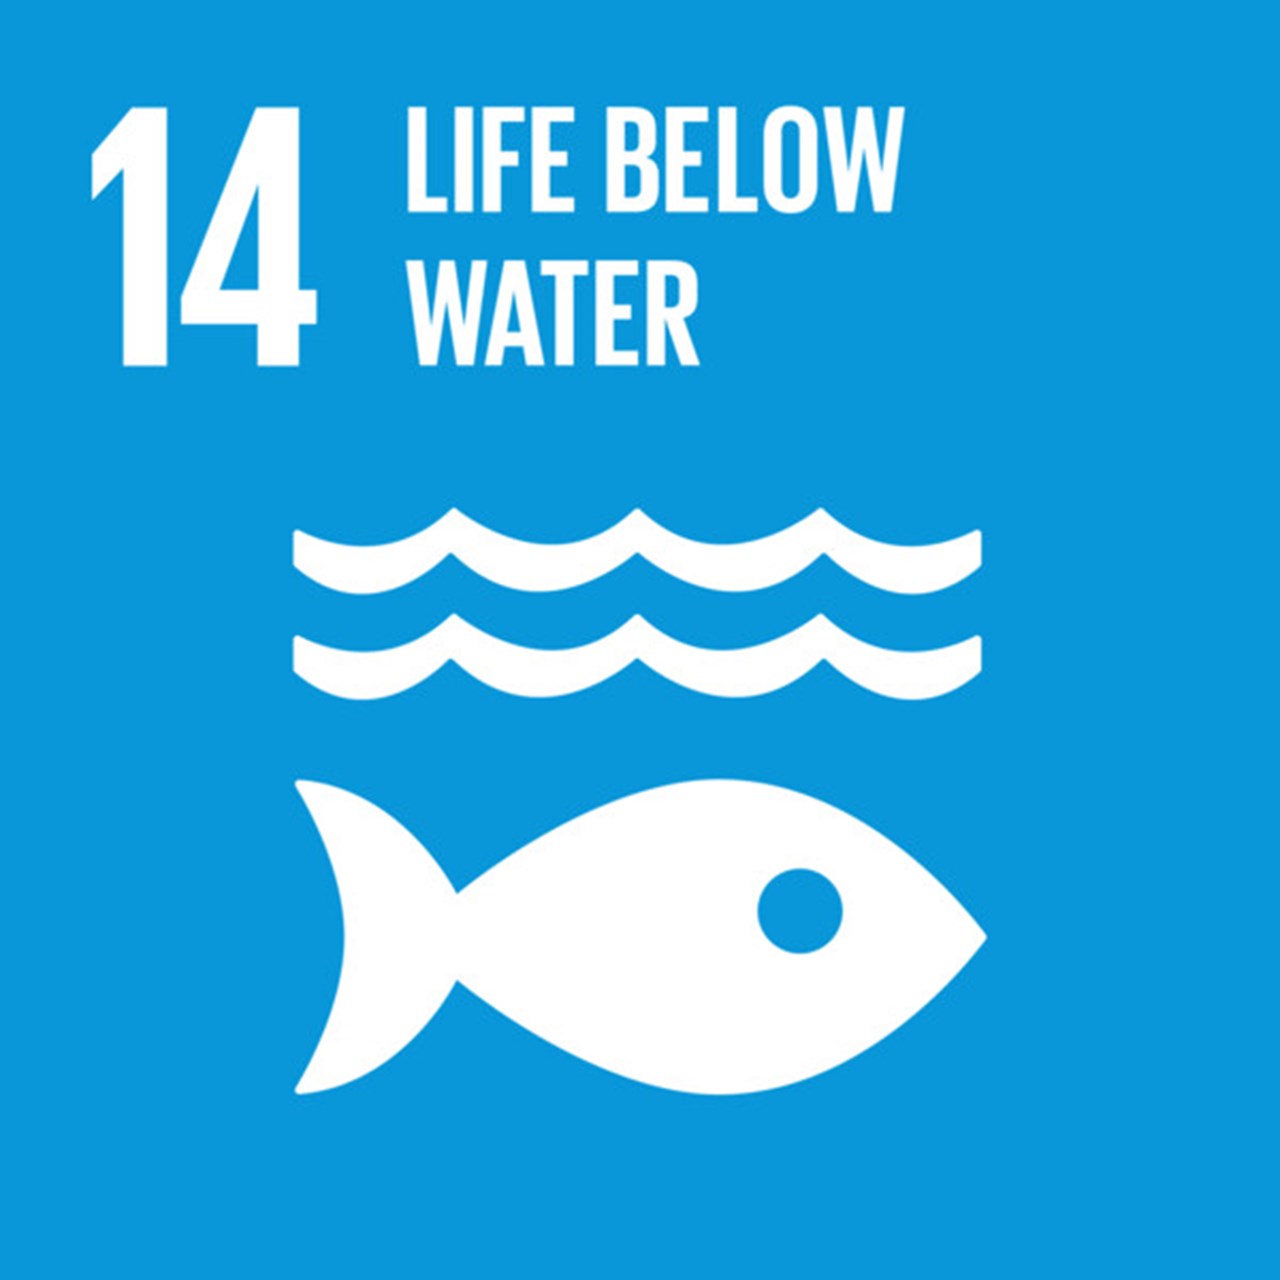 The Global Goals, Goal 14 - Life Below Water